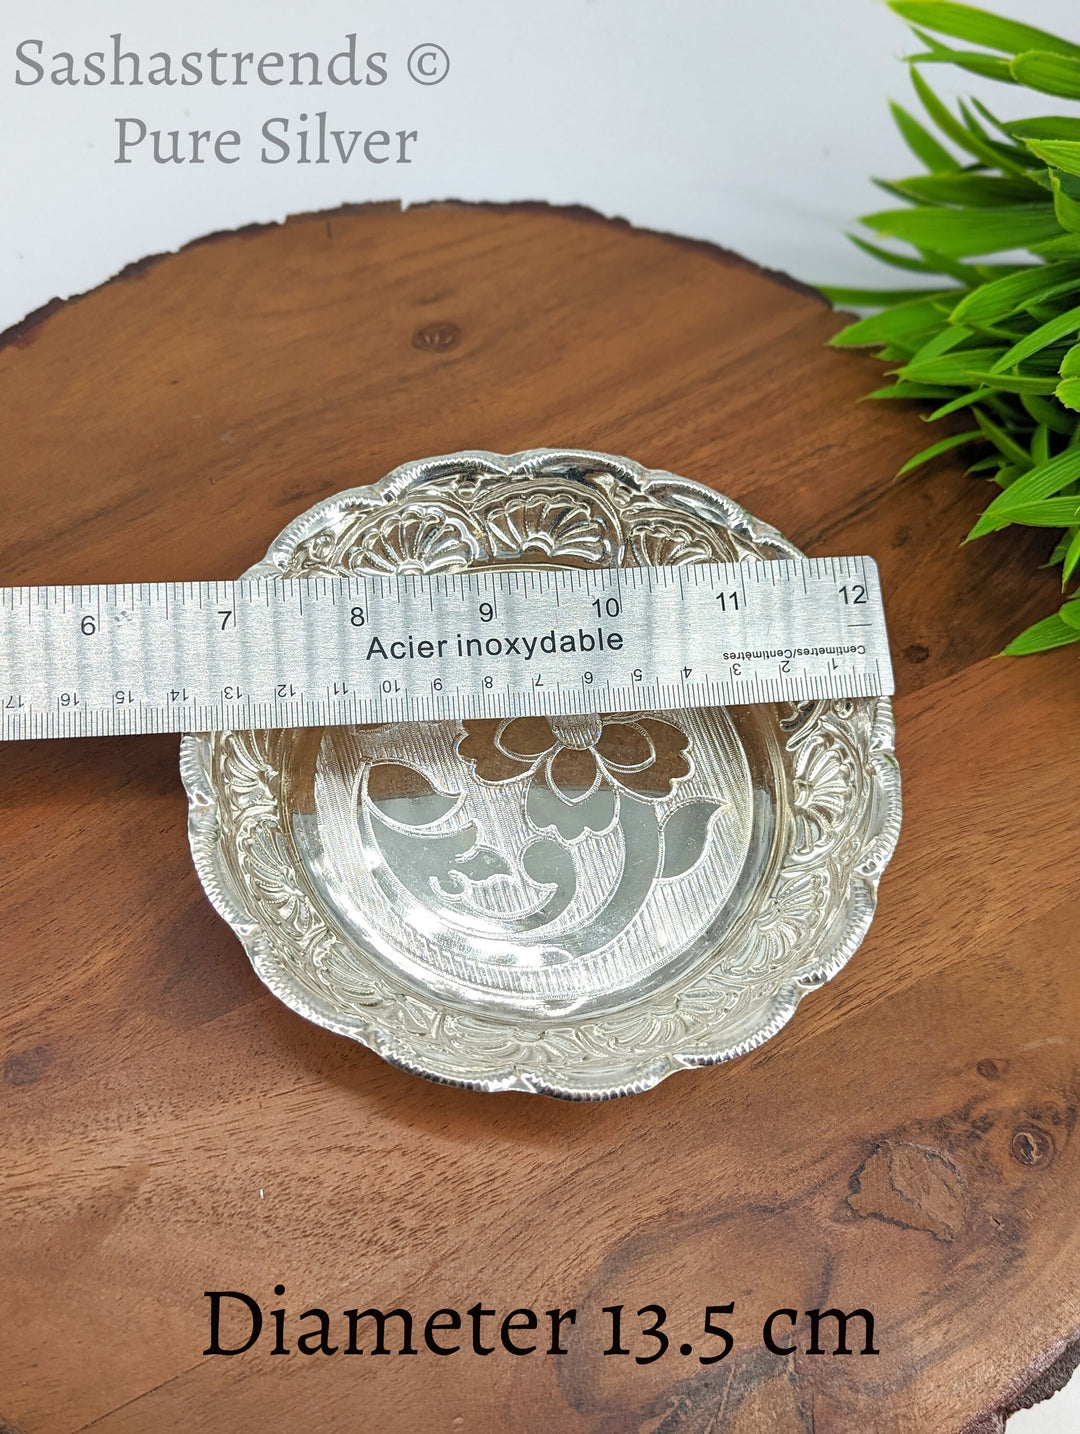 Pure silver plate -13.5 cms diameter- Silver pooja plate - pooja items for home, return gift for navarathri, wedding & housewarming